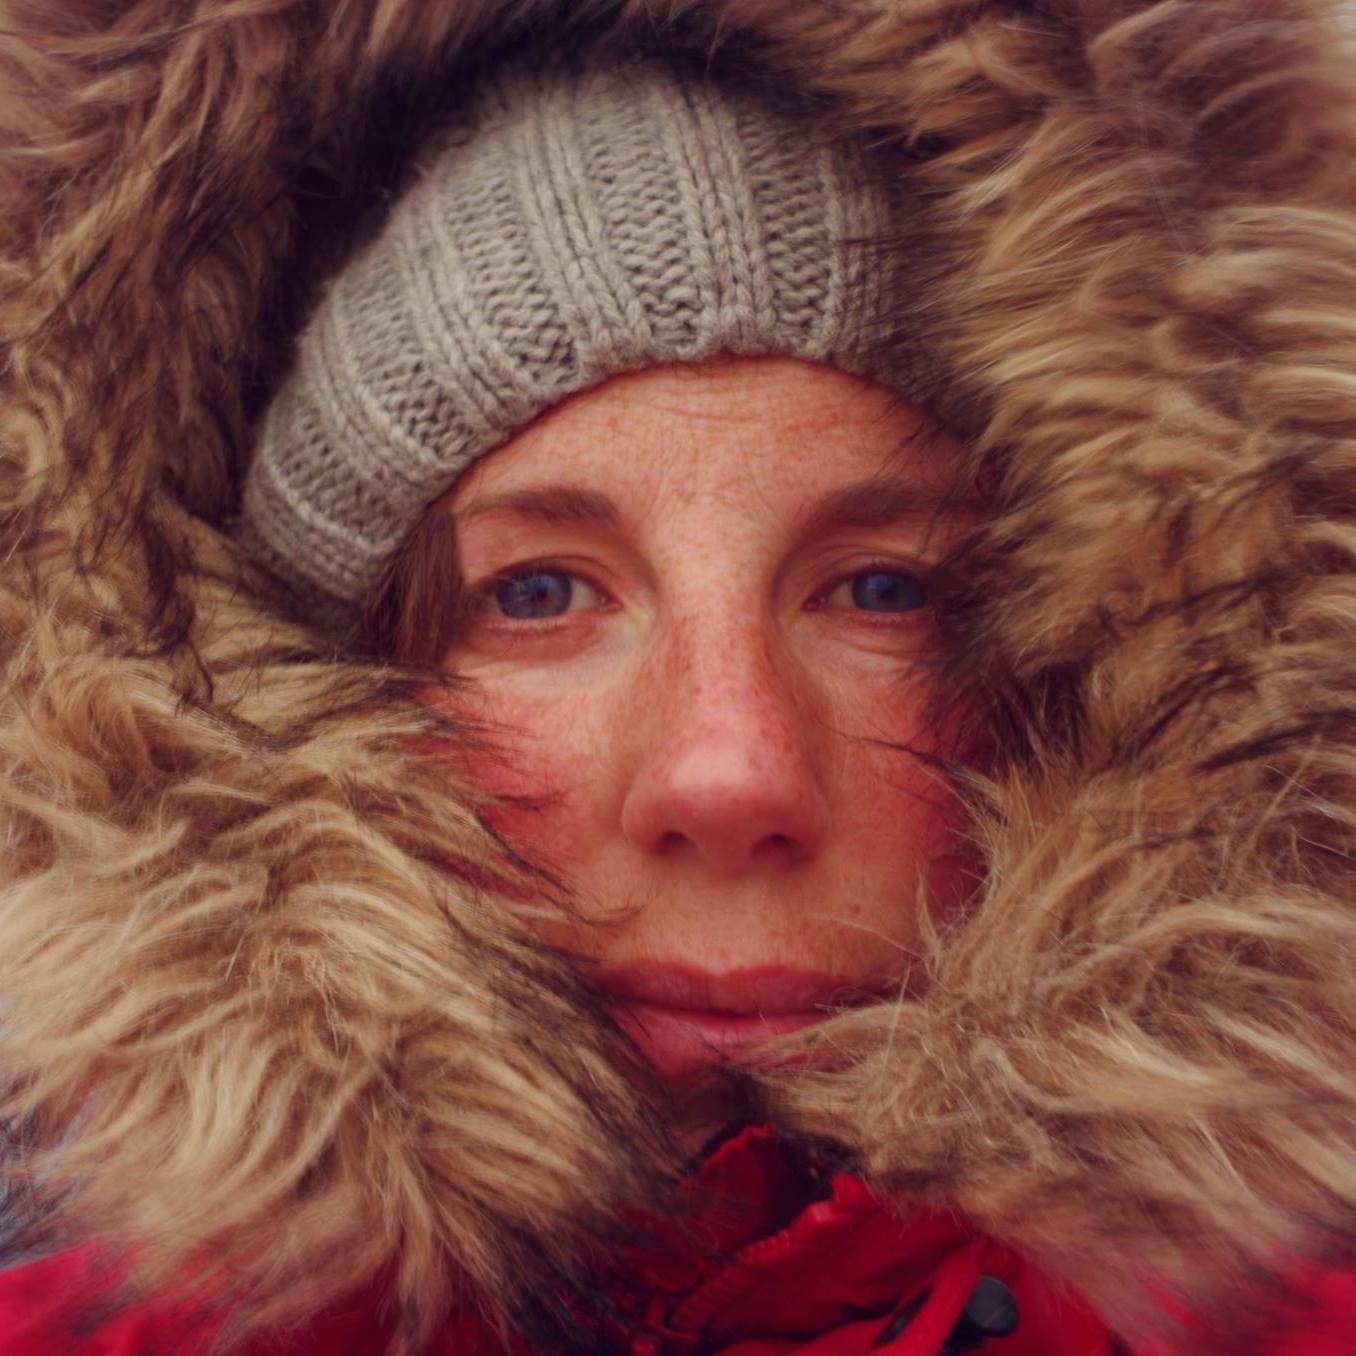 Polar alien hunter ▪️ Ecologist of cold places ▪️ Tea, no sugar.   Co-founder of @polar_aliens  https://t.co/jrIqTSwZhl
@NINAnature 
#scicomm